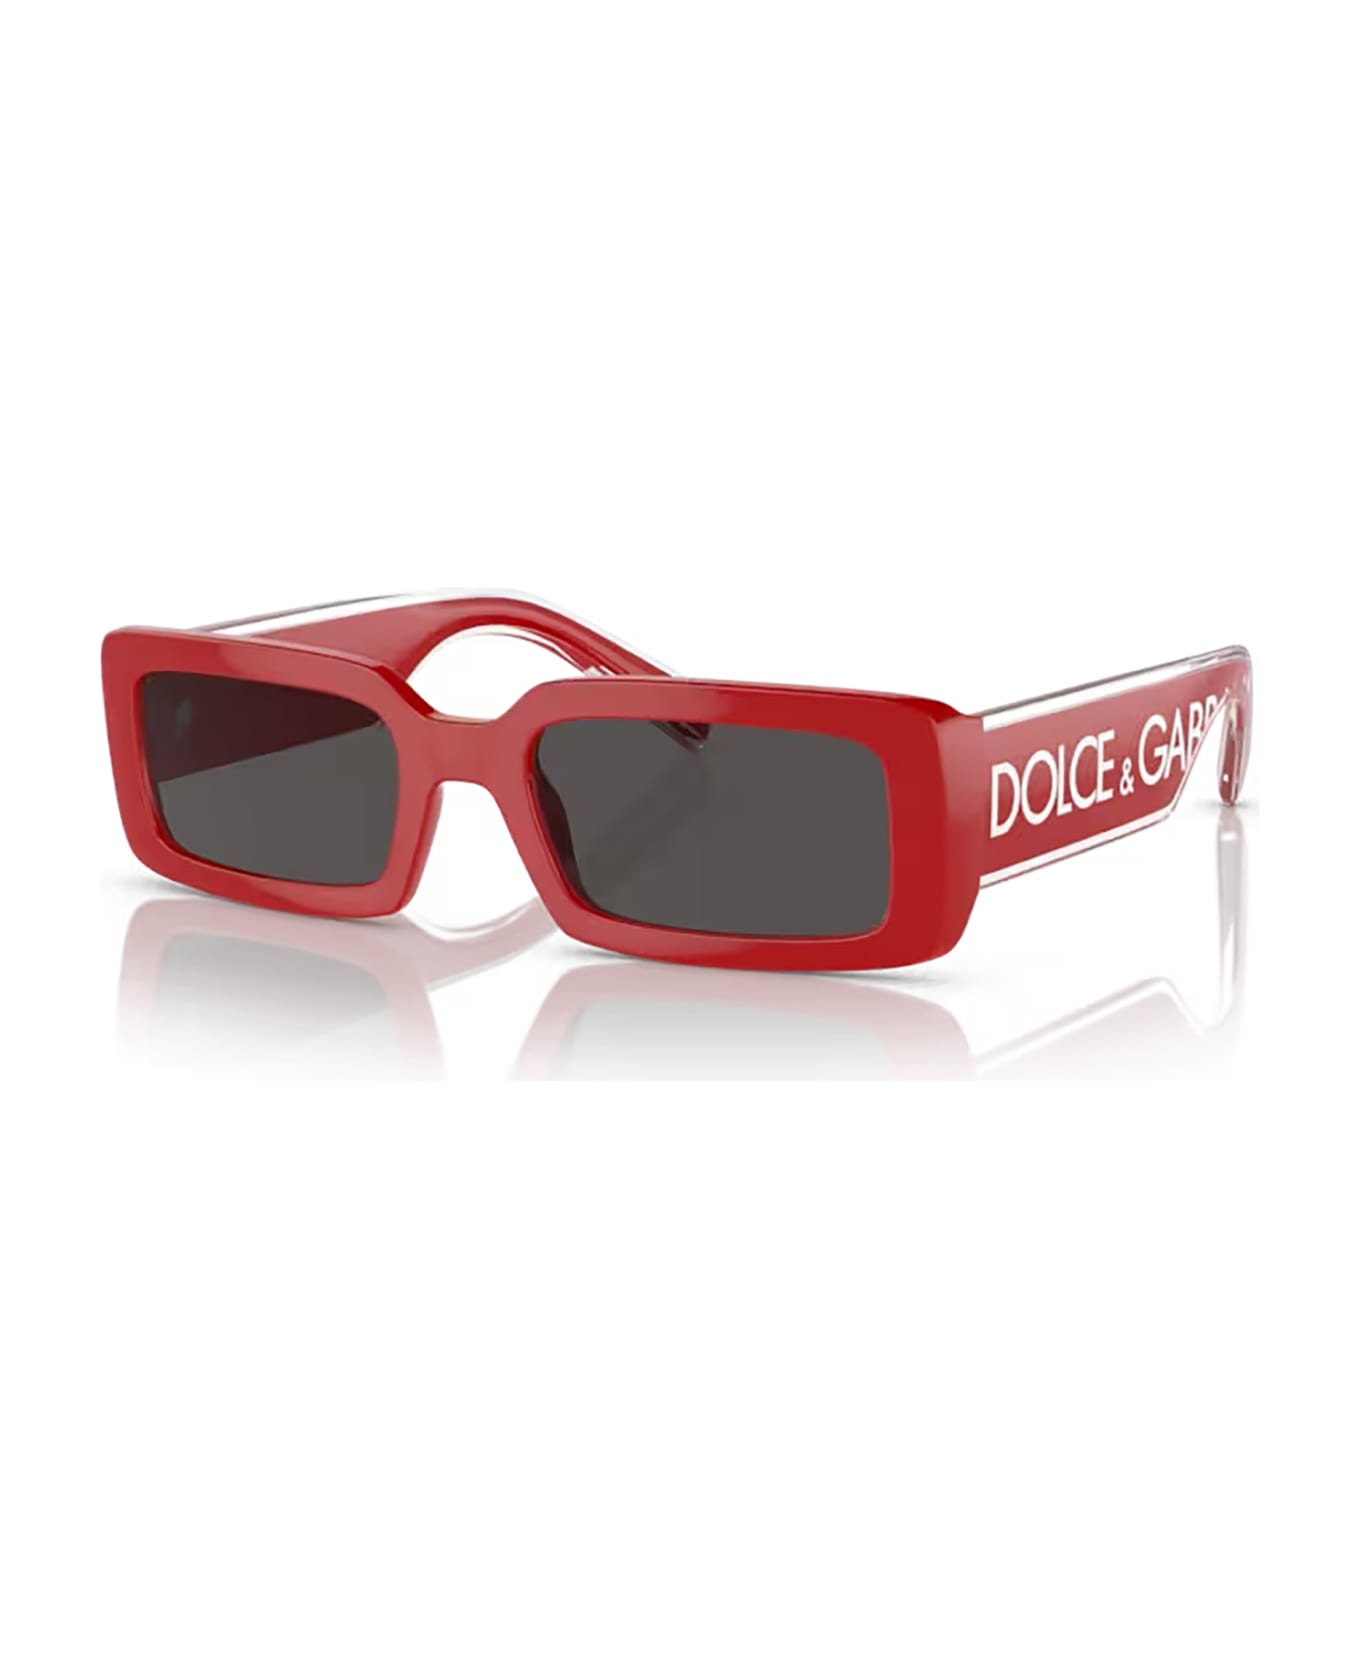 Dolce & Gabbana Eyewear Dg6187 Red Sunglasses - Red